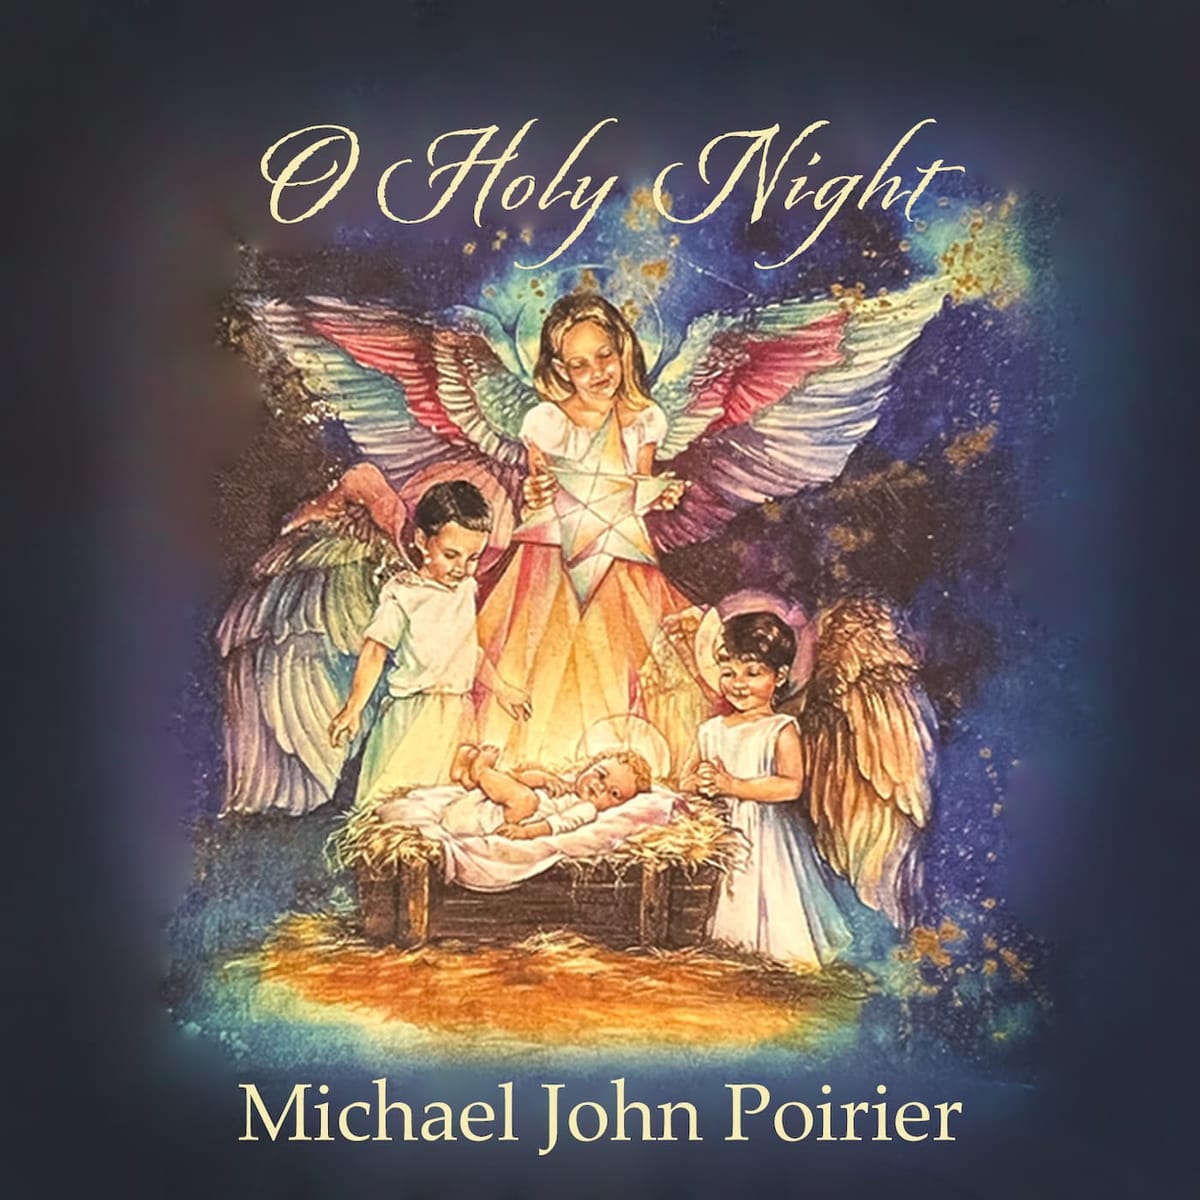 Oh Holy Night - Full Album